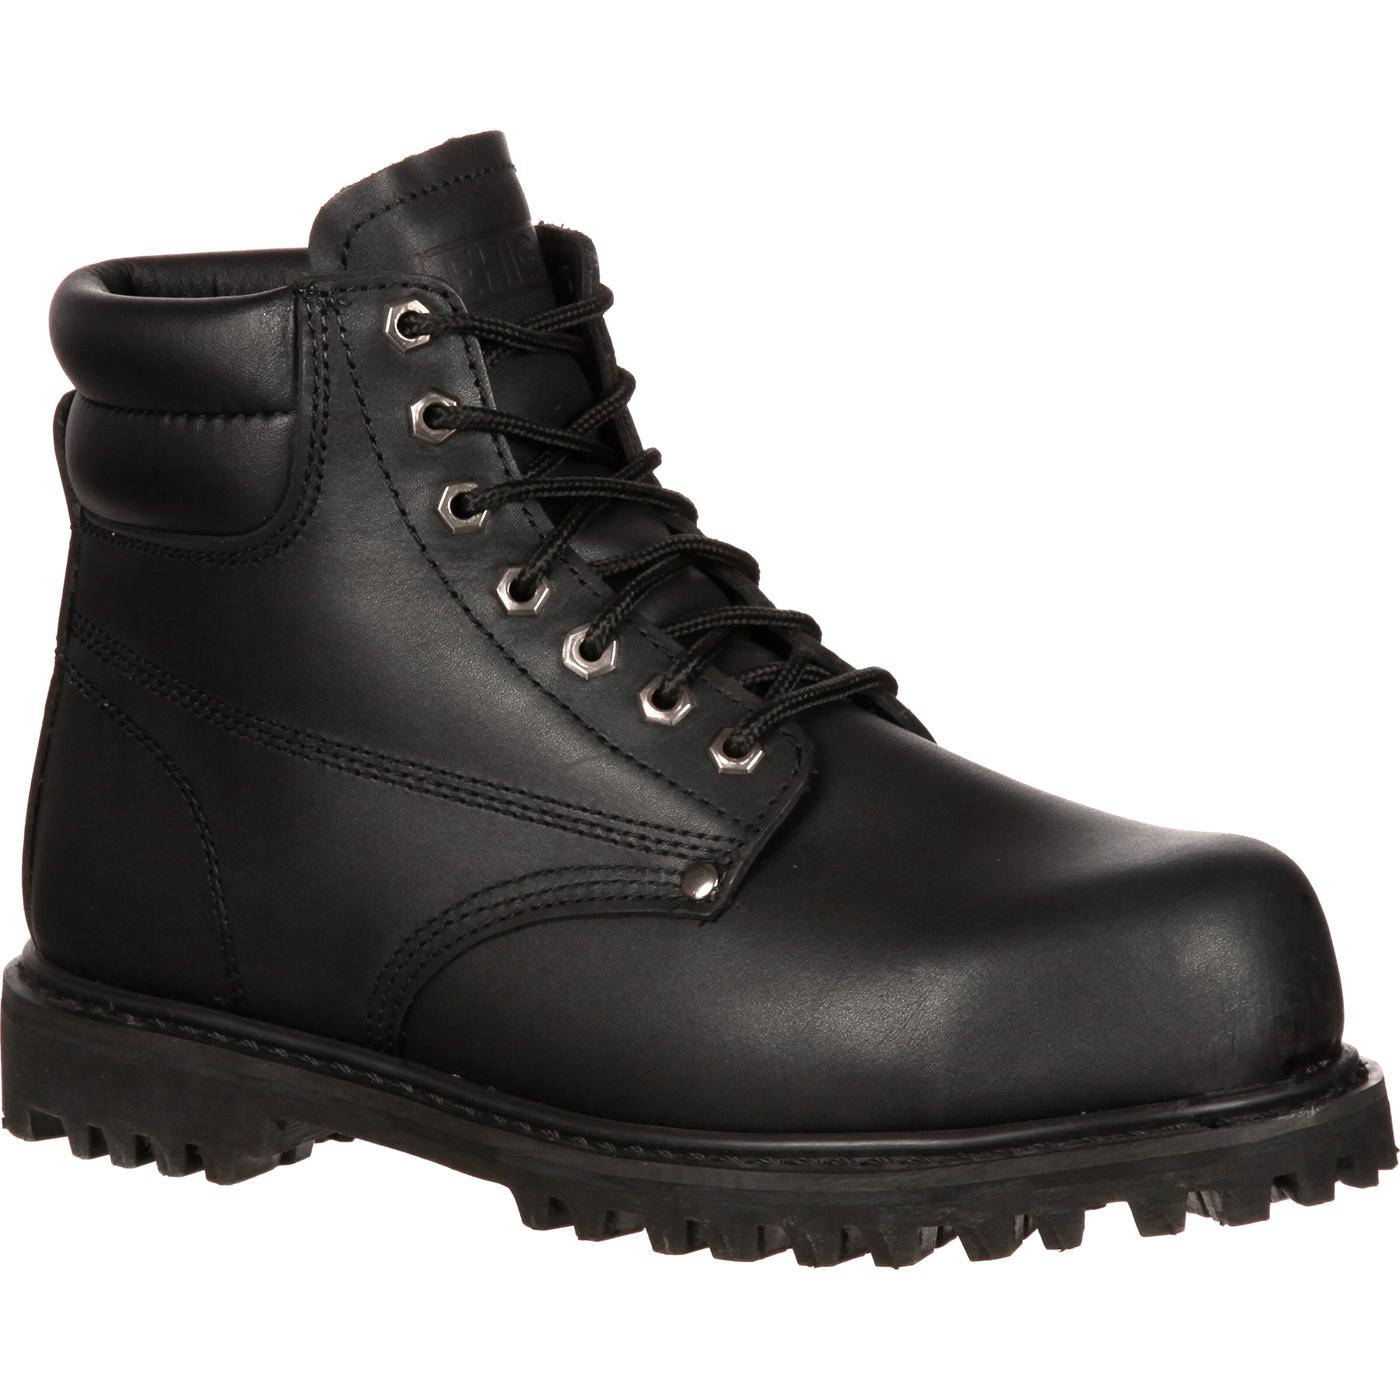 lehigh work boots